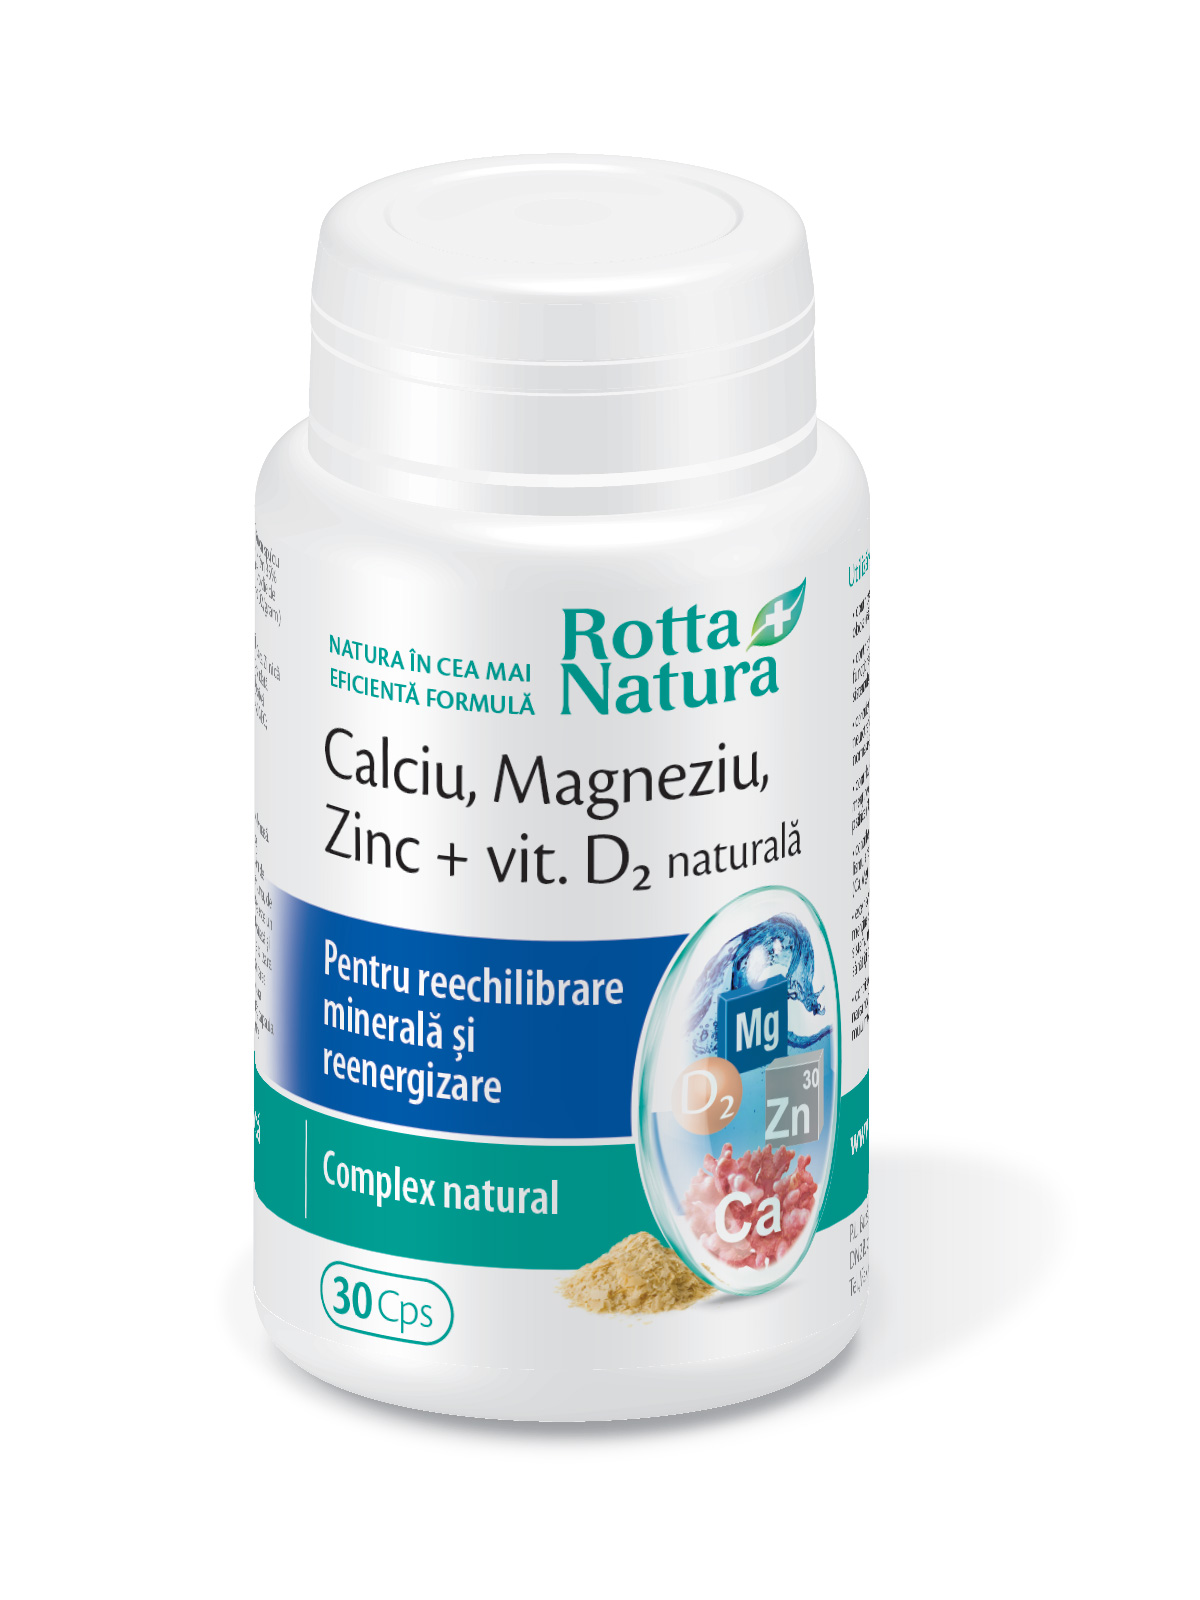 Minerale - Ca-Mg-Zn + Vitamina D2 naturală, 30 capsule, Rotta Natura, sinapis.ro